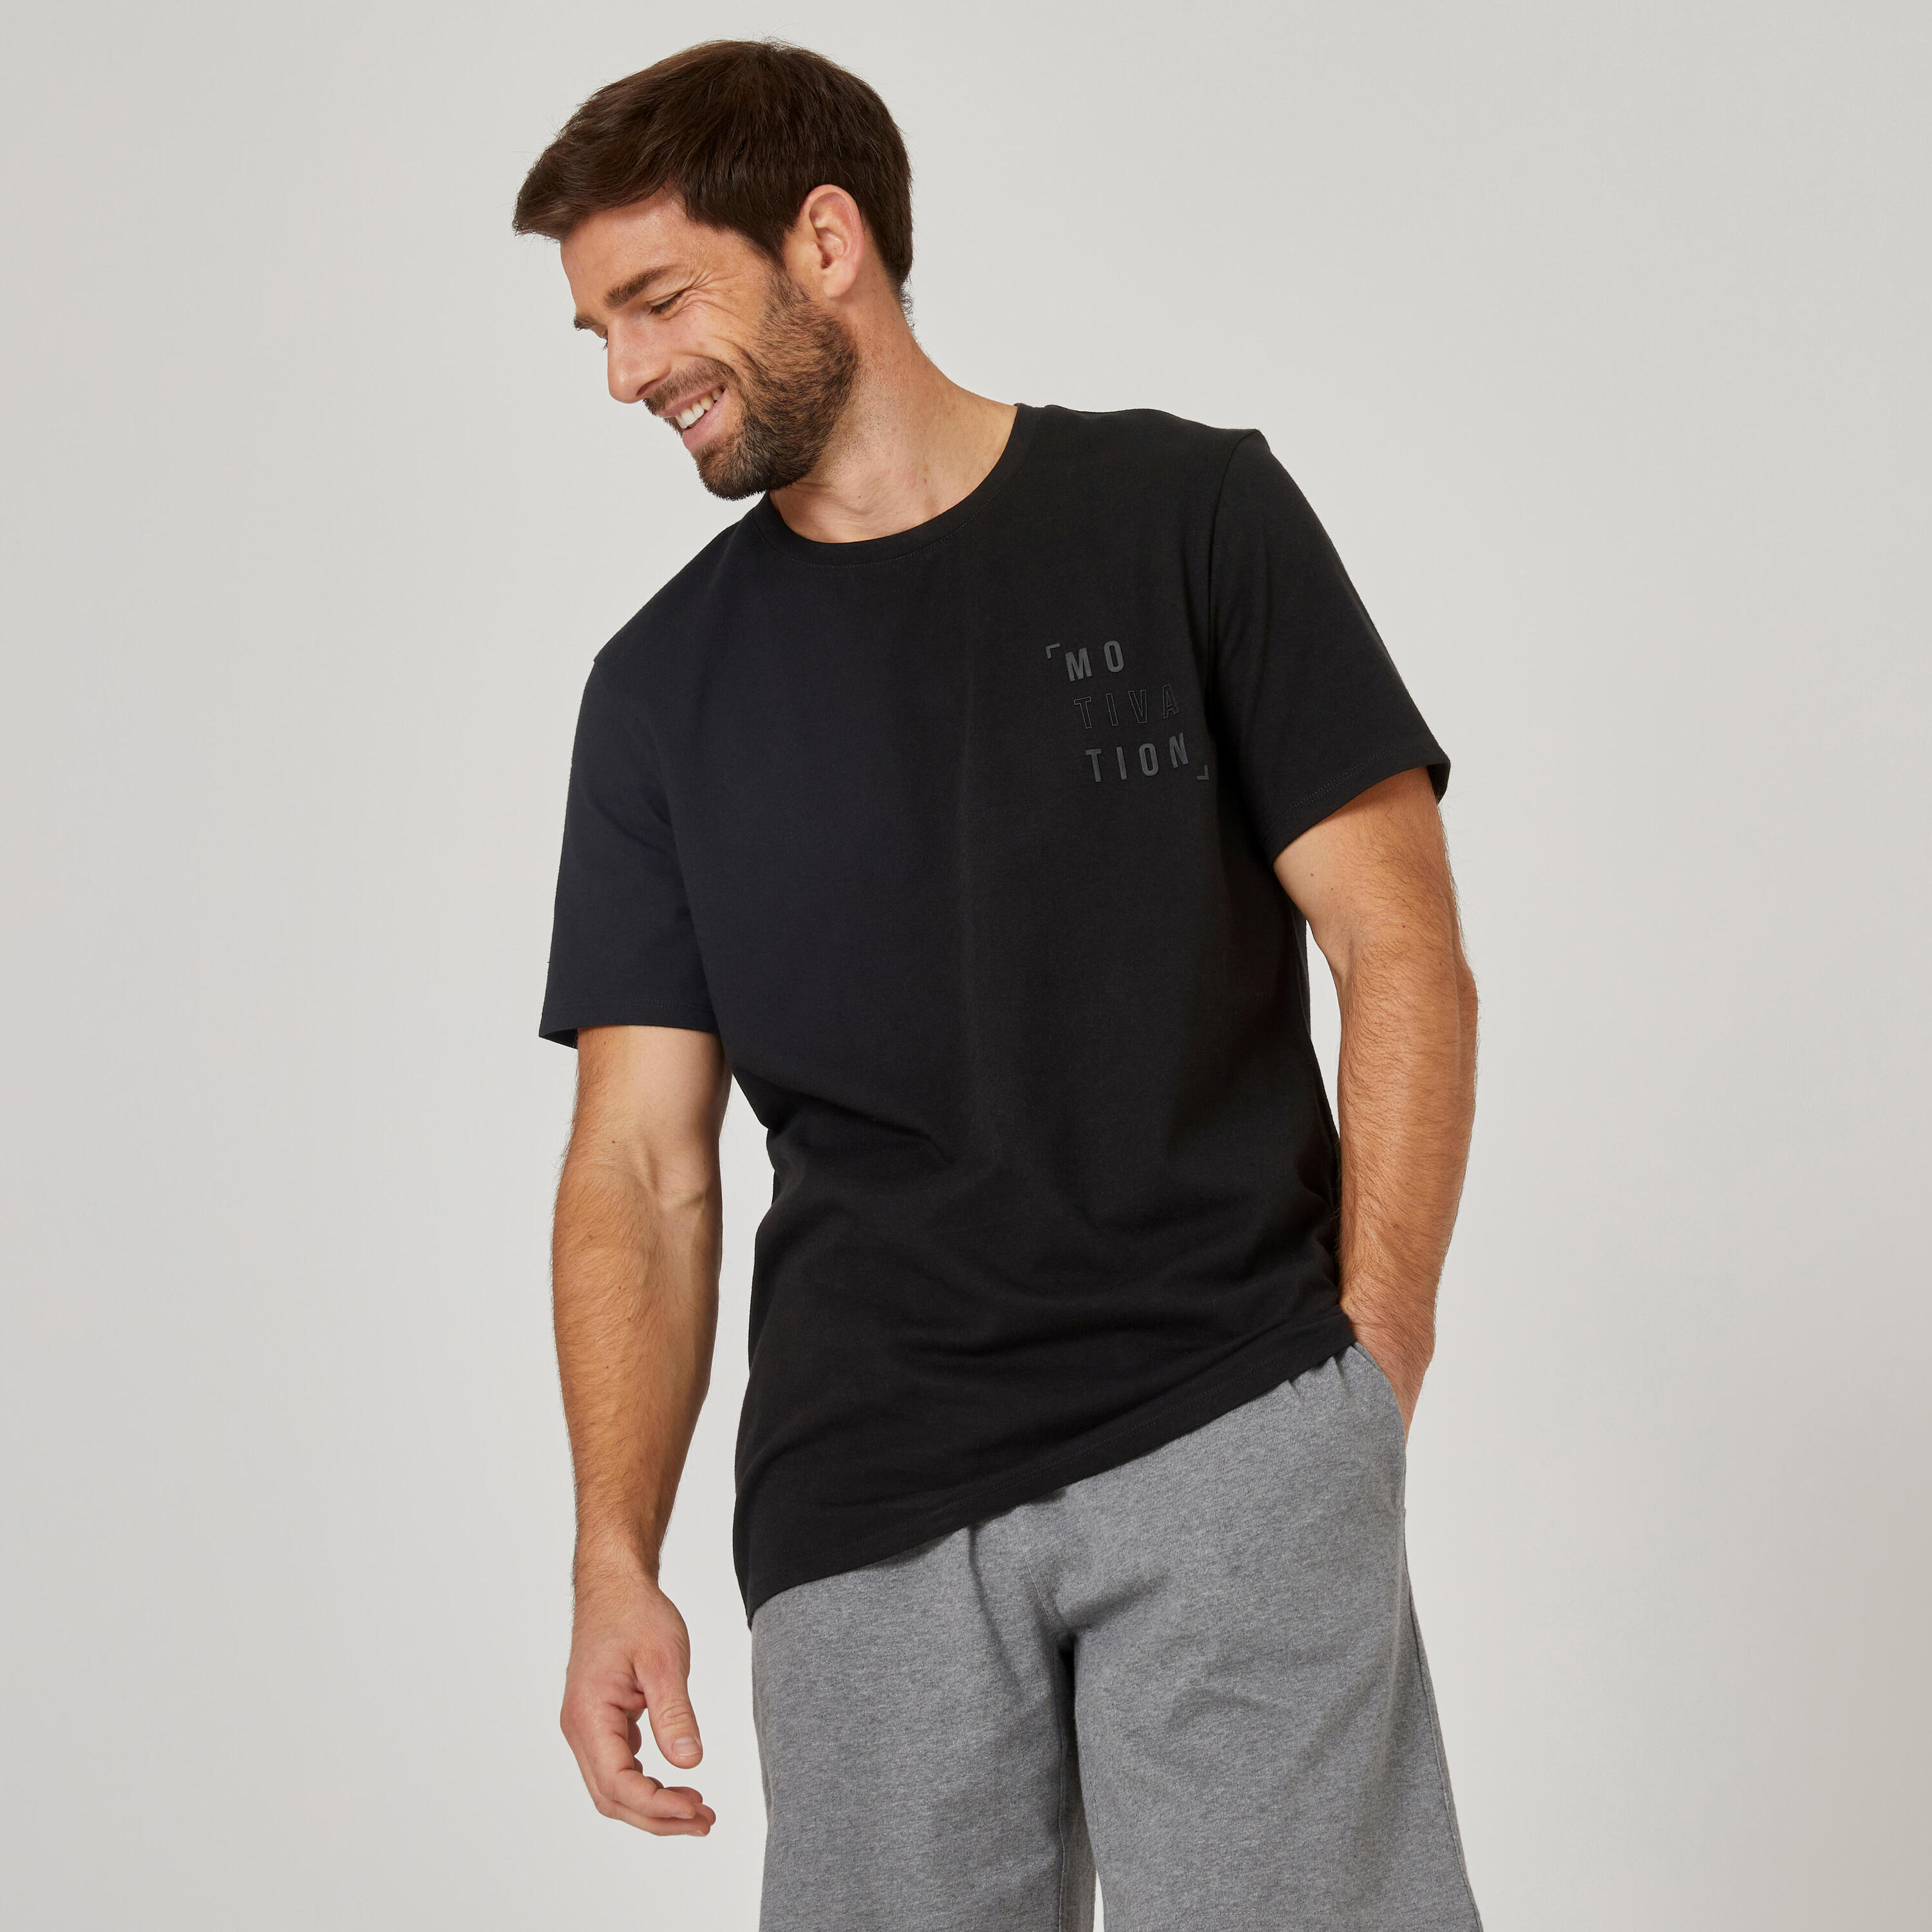 DOMYOS Men's Short-Sleeved Straight-Cut Crew Neck Cotton Fitness T-Shirt 500 - Black and Print